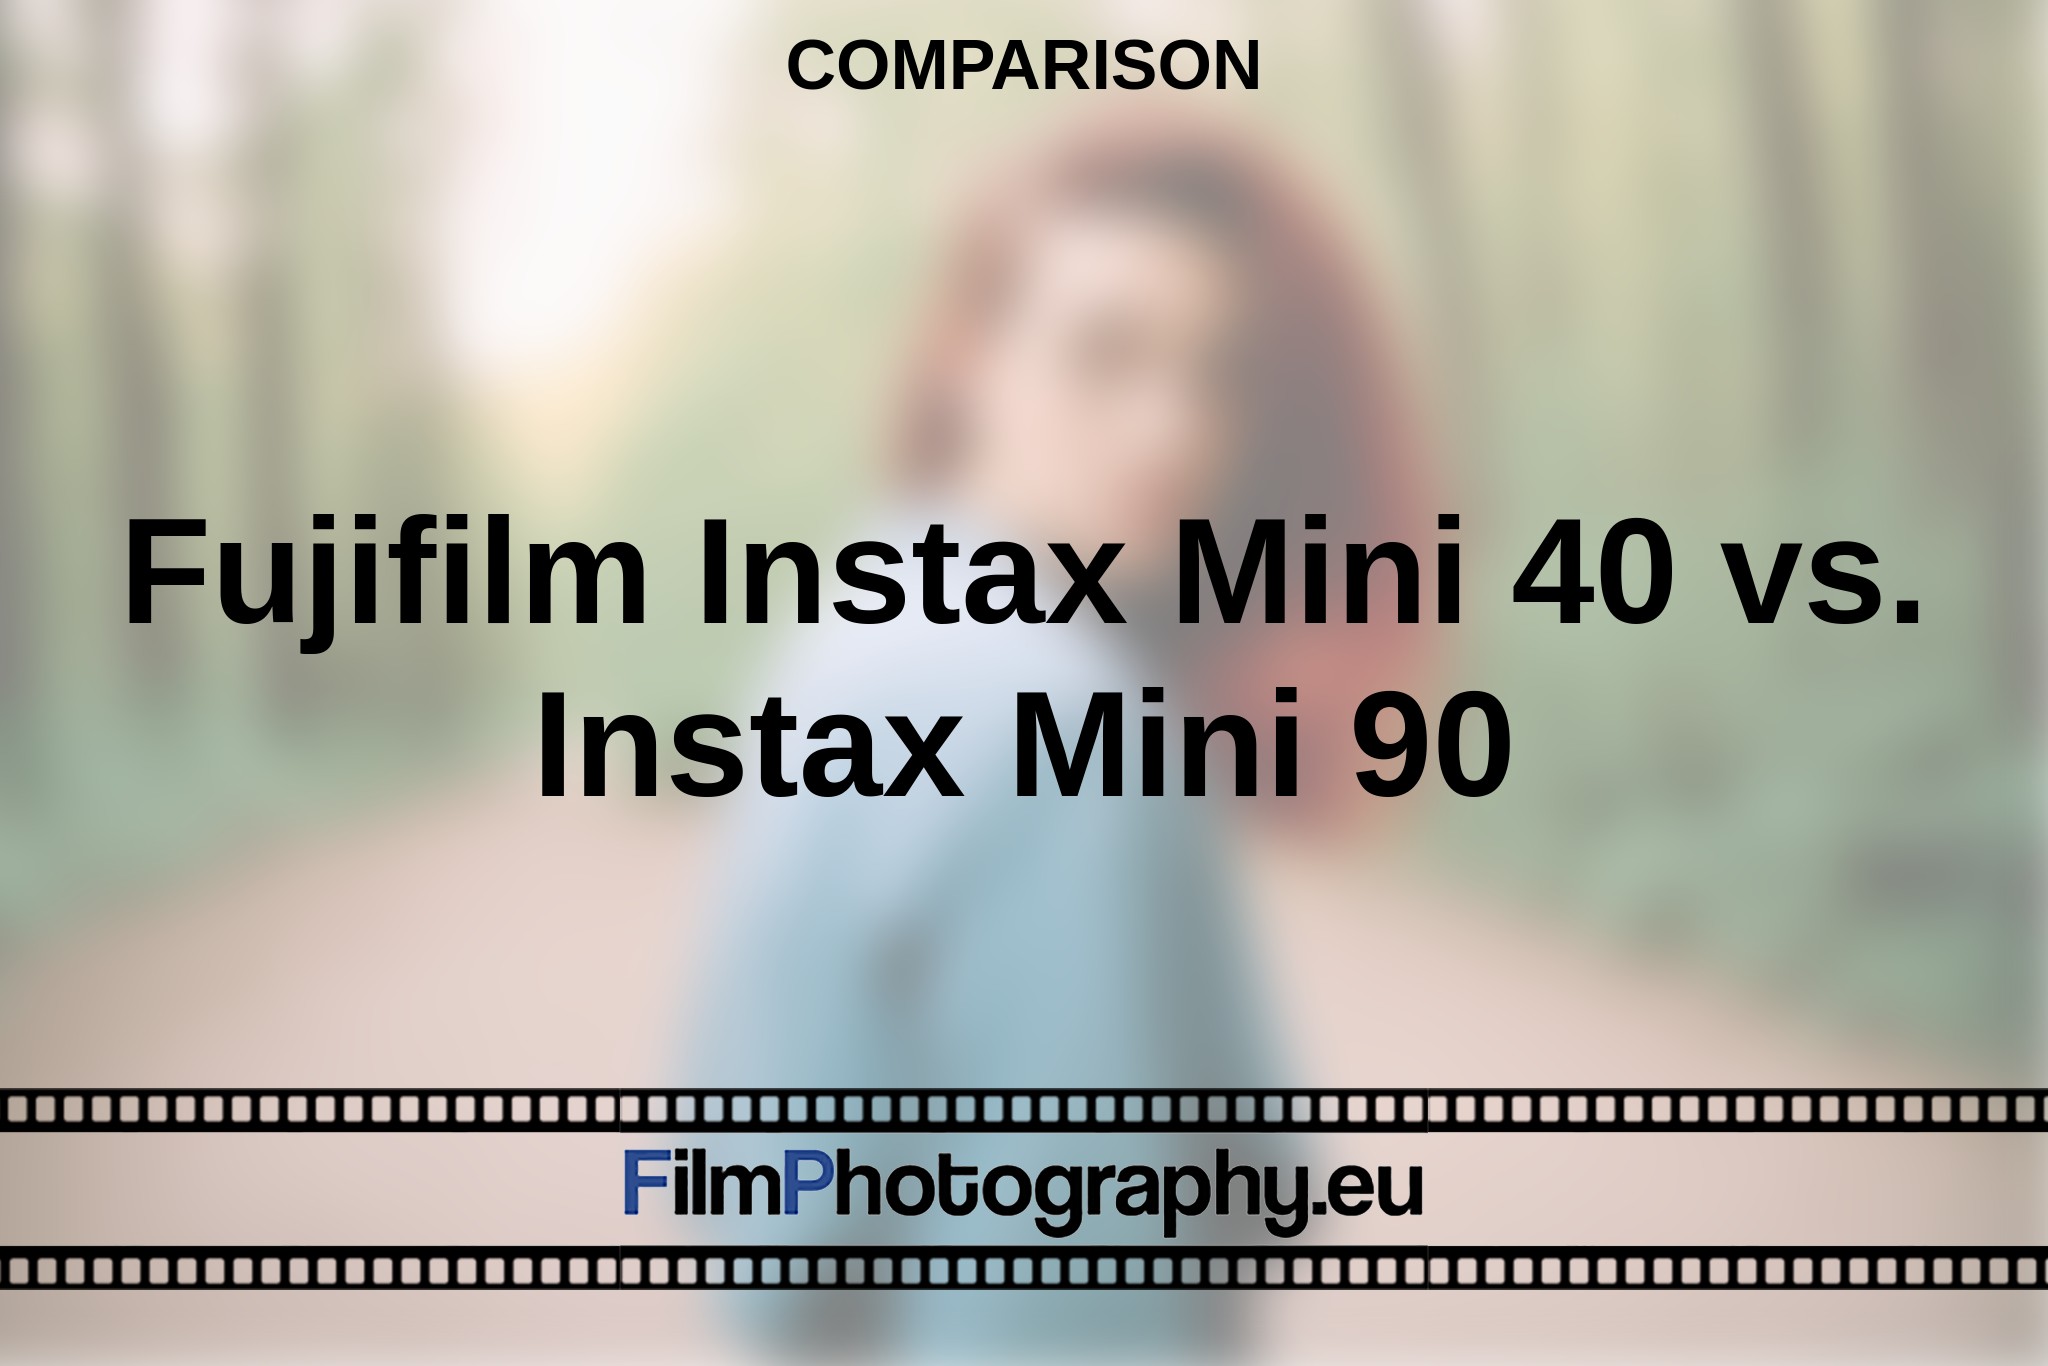 fujifilm-instax-mini-40-vs-instax-mini-90-comparison-bnv.jpg